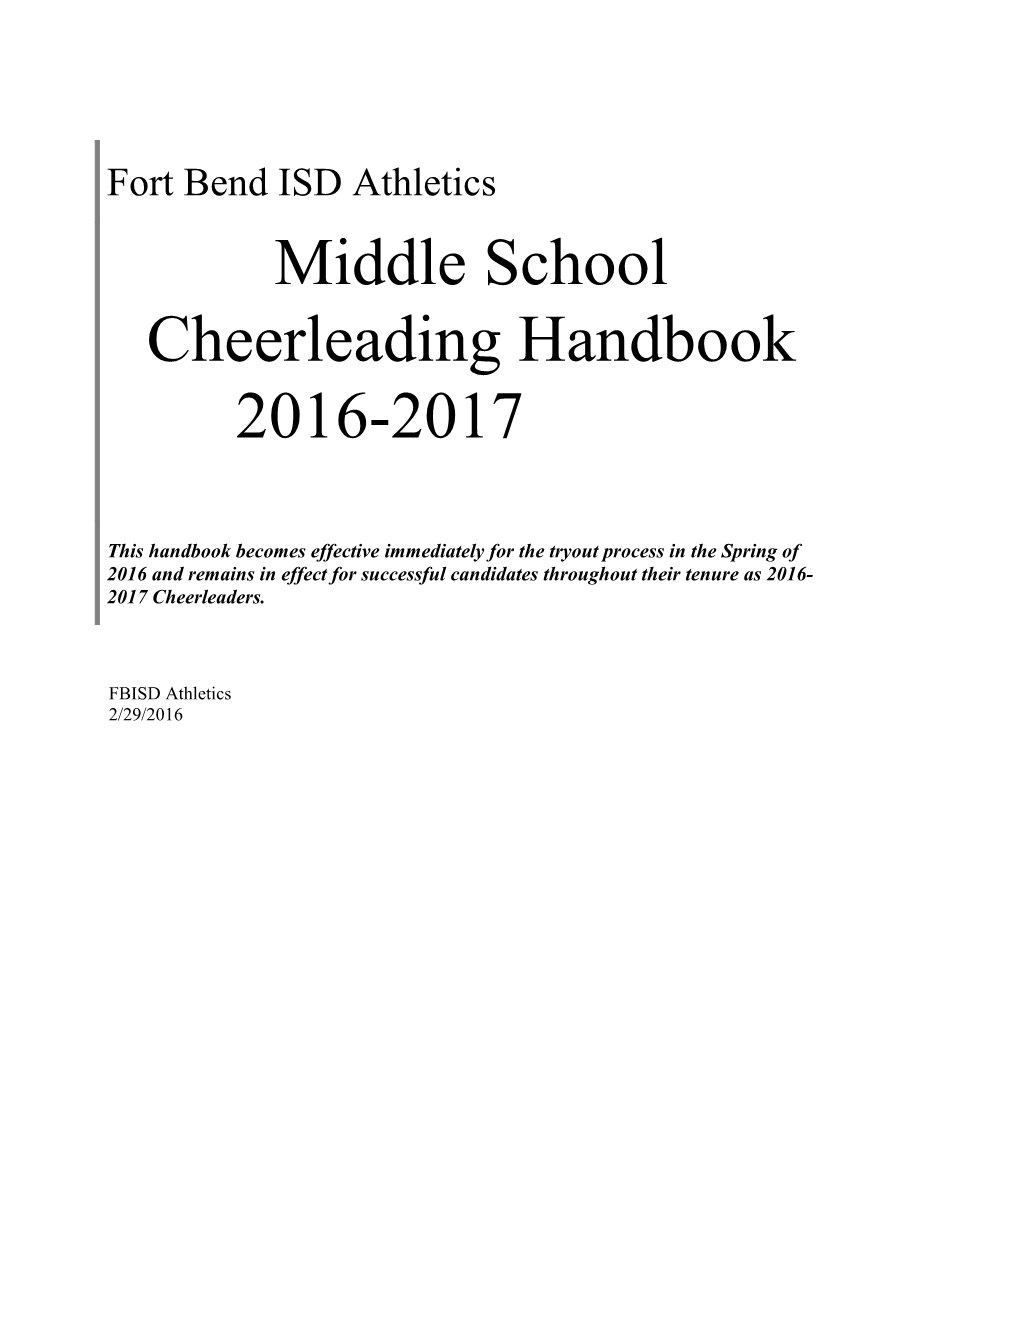 Middle School Cheerleading Handbook 2016-2017